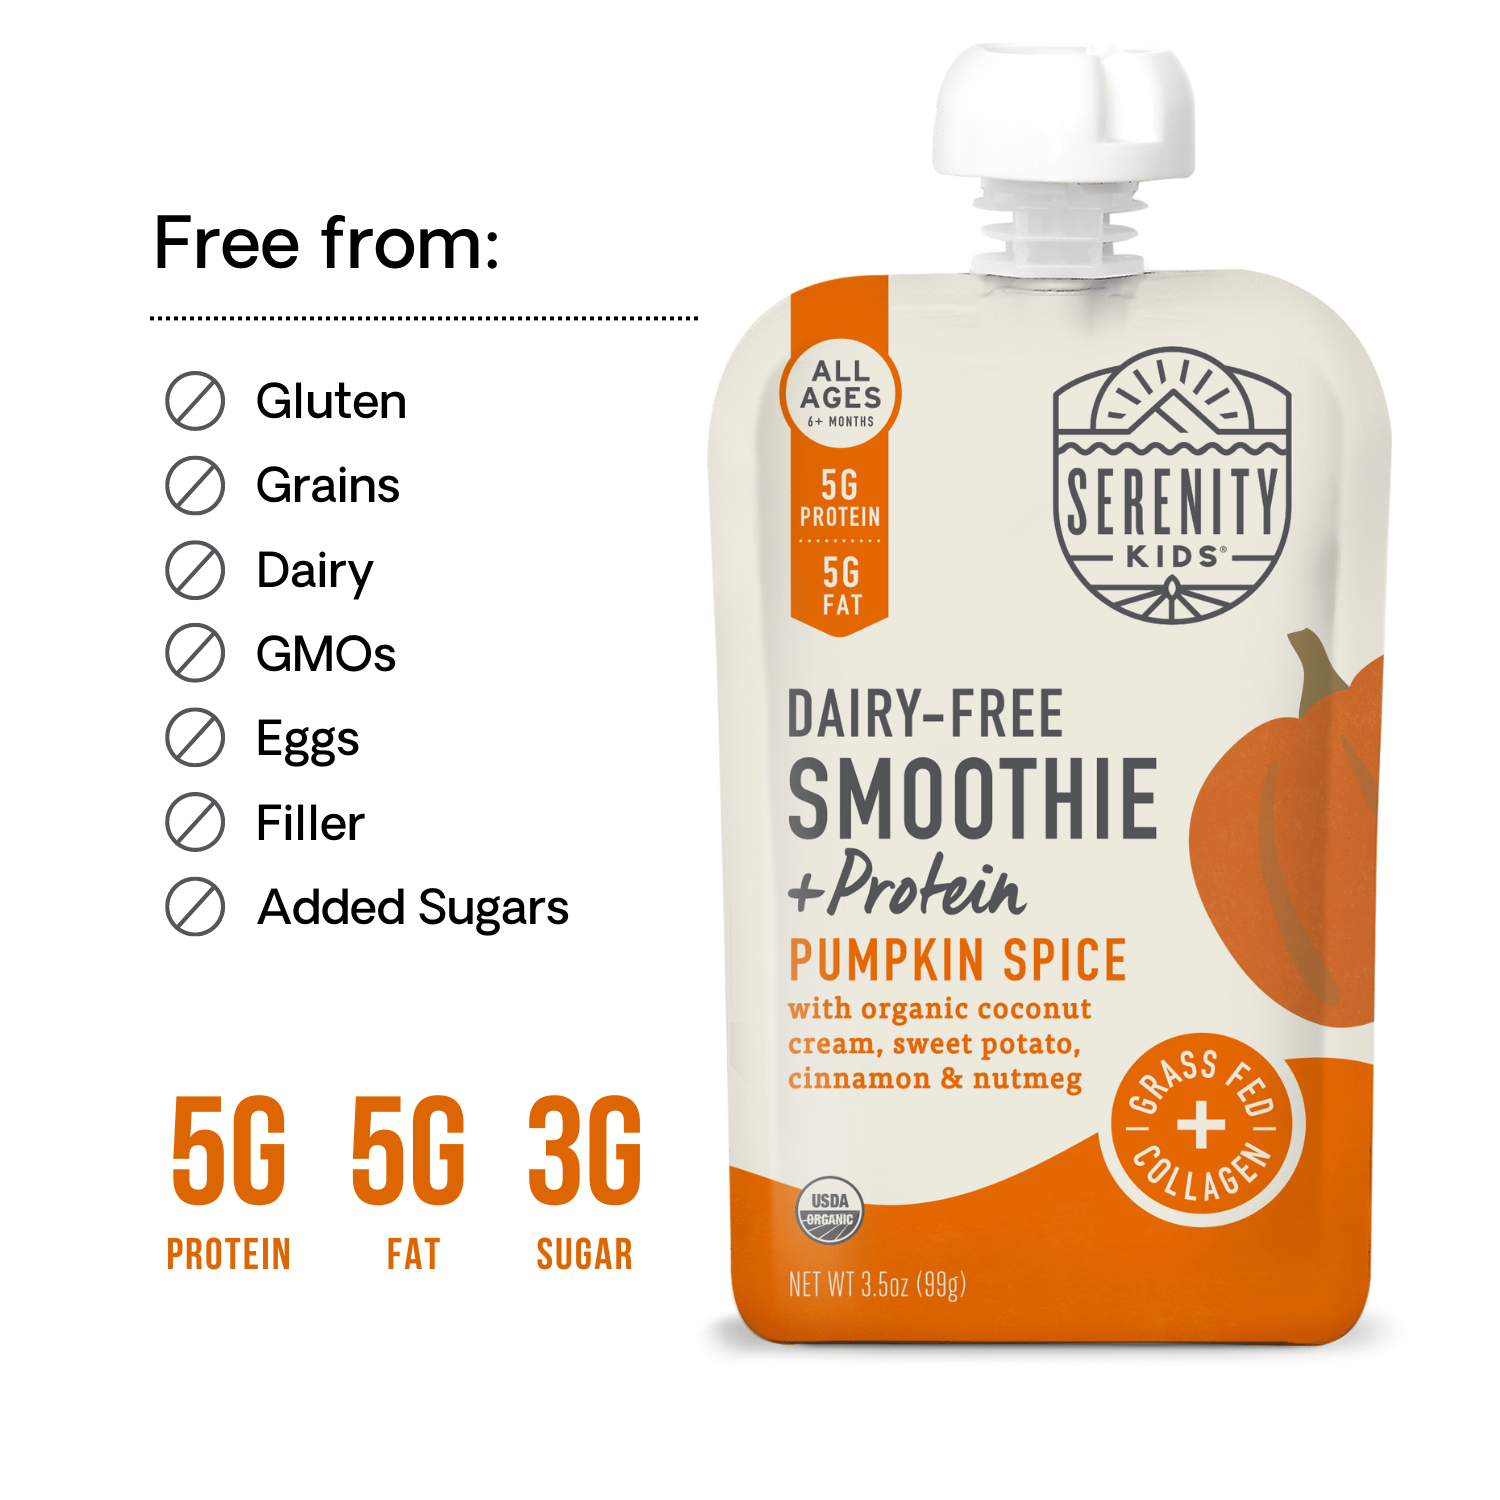 Pumpkin Spice Dairy-Free Smoothie + Protein - Serenity Kids - Free From Ingredients